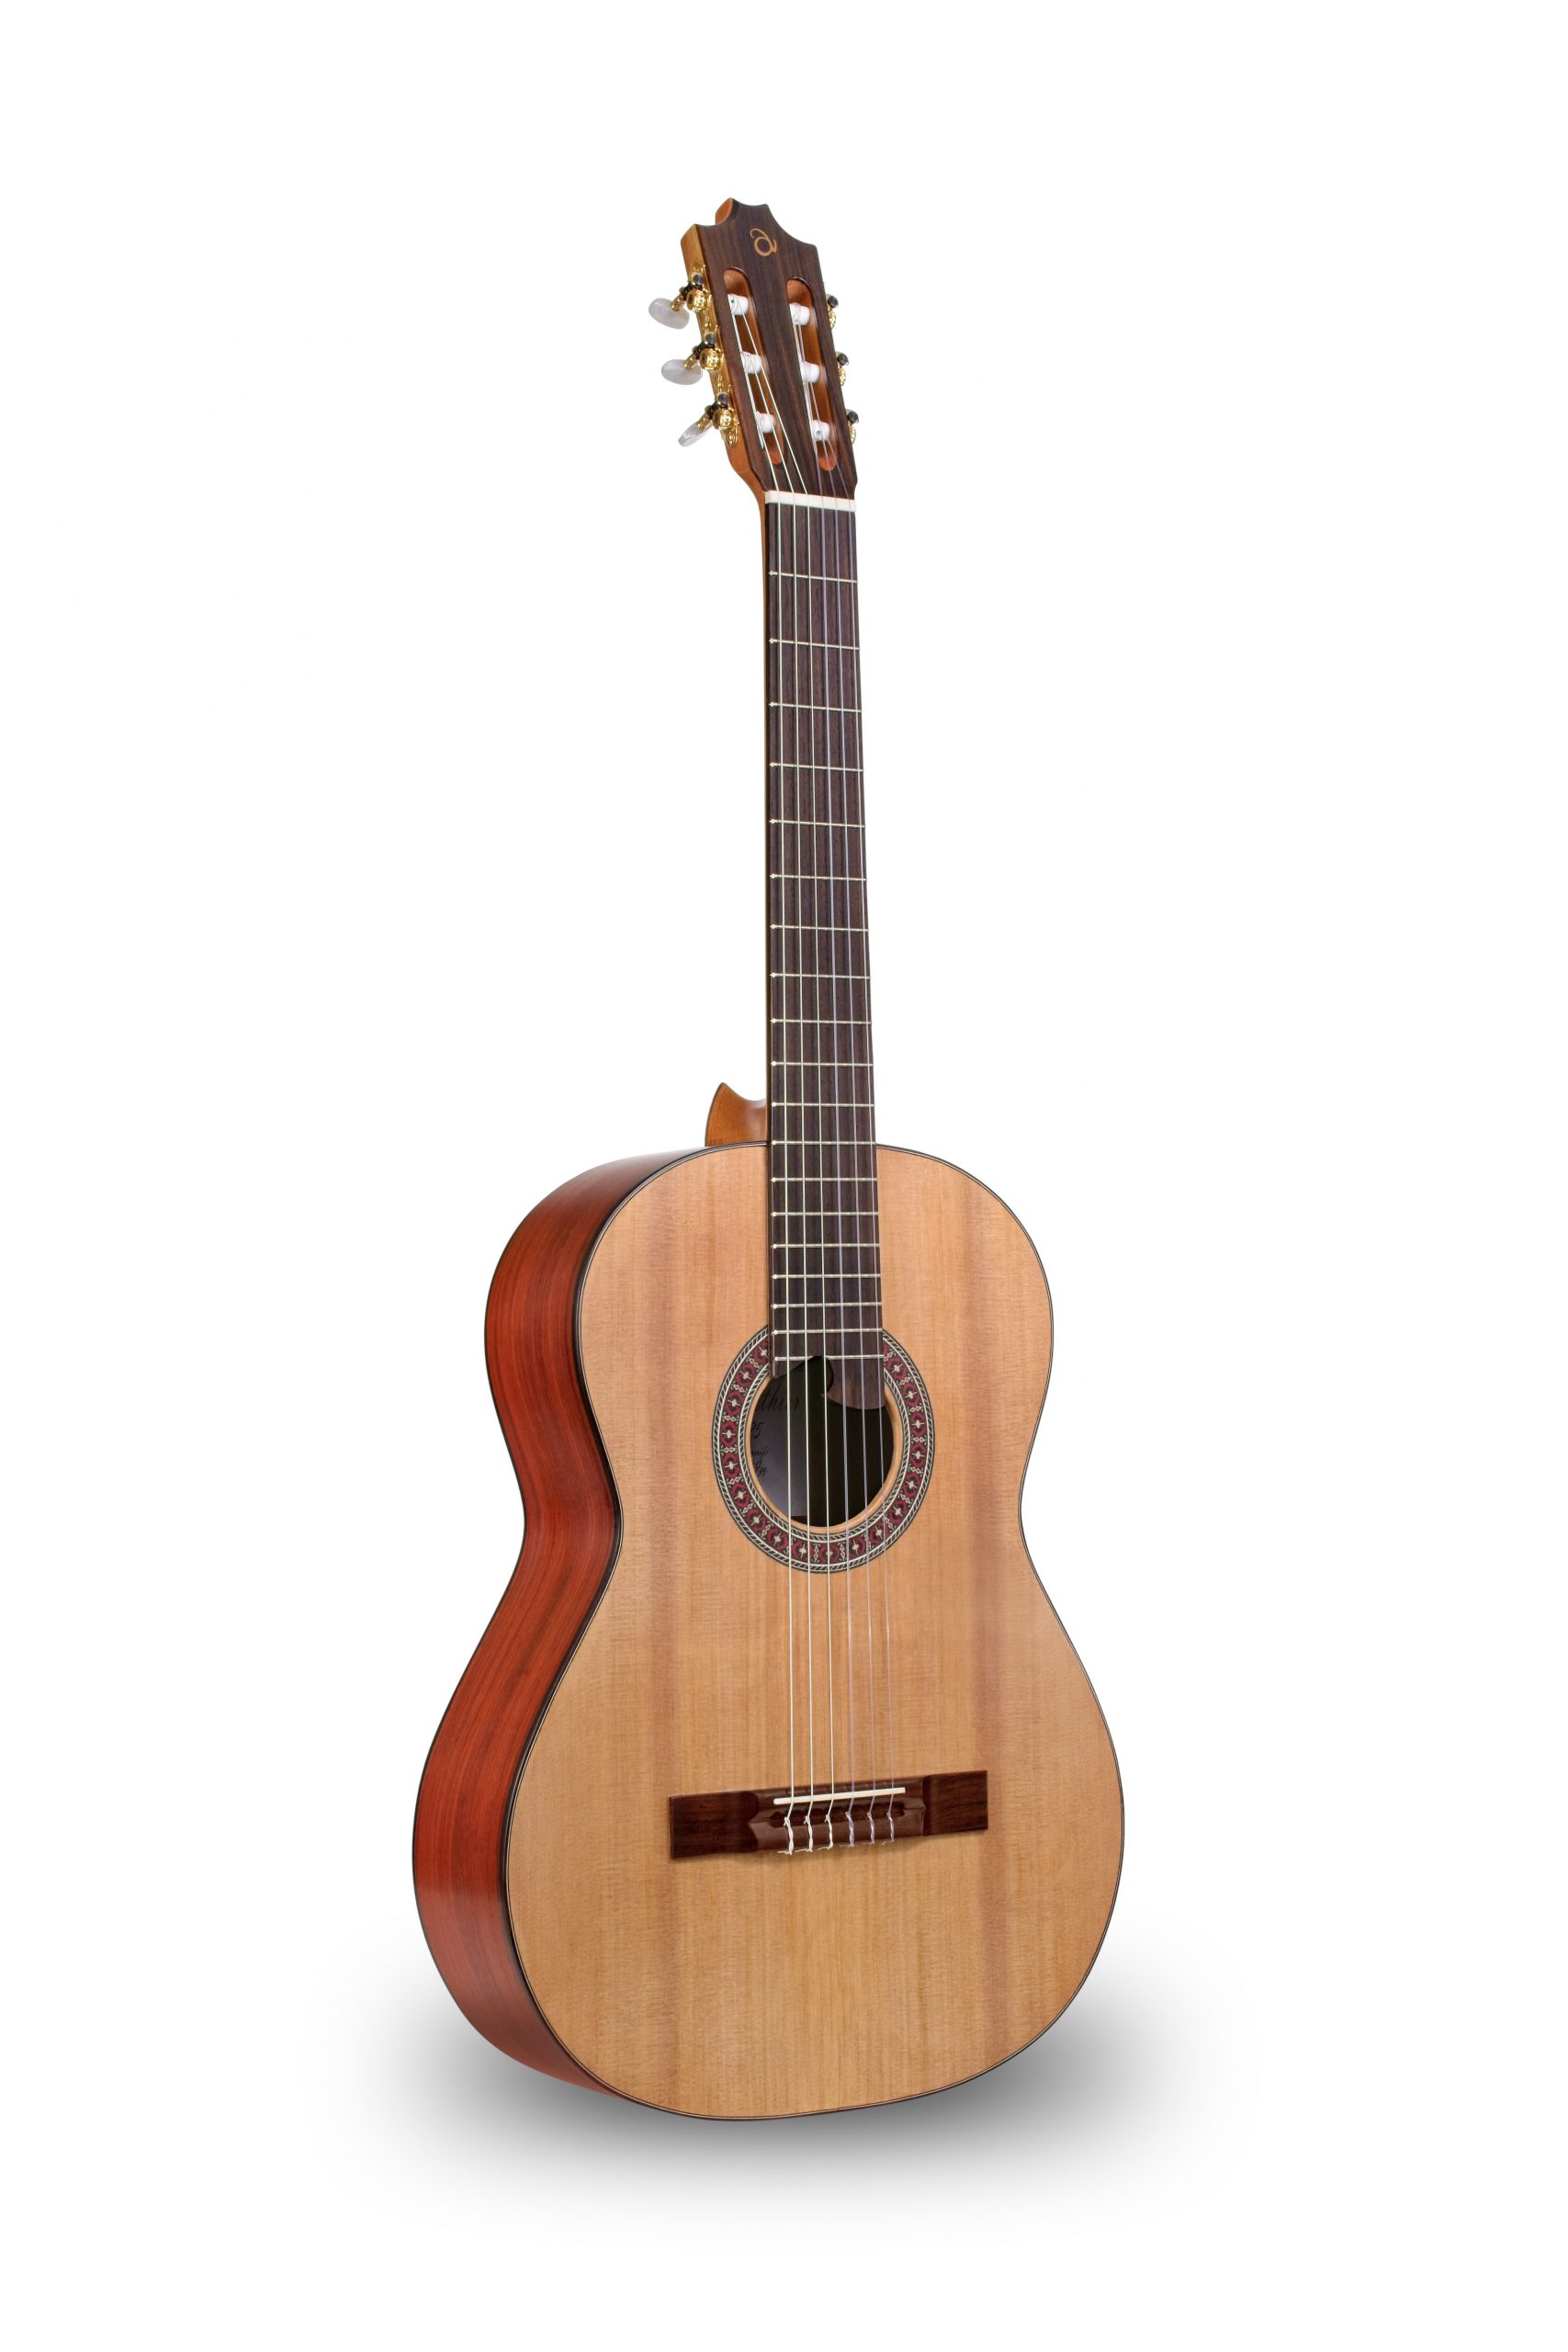 Guitarra Artesanal modelo Las Breñas. Abraham Luthier